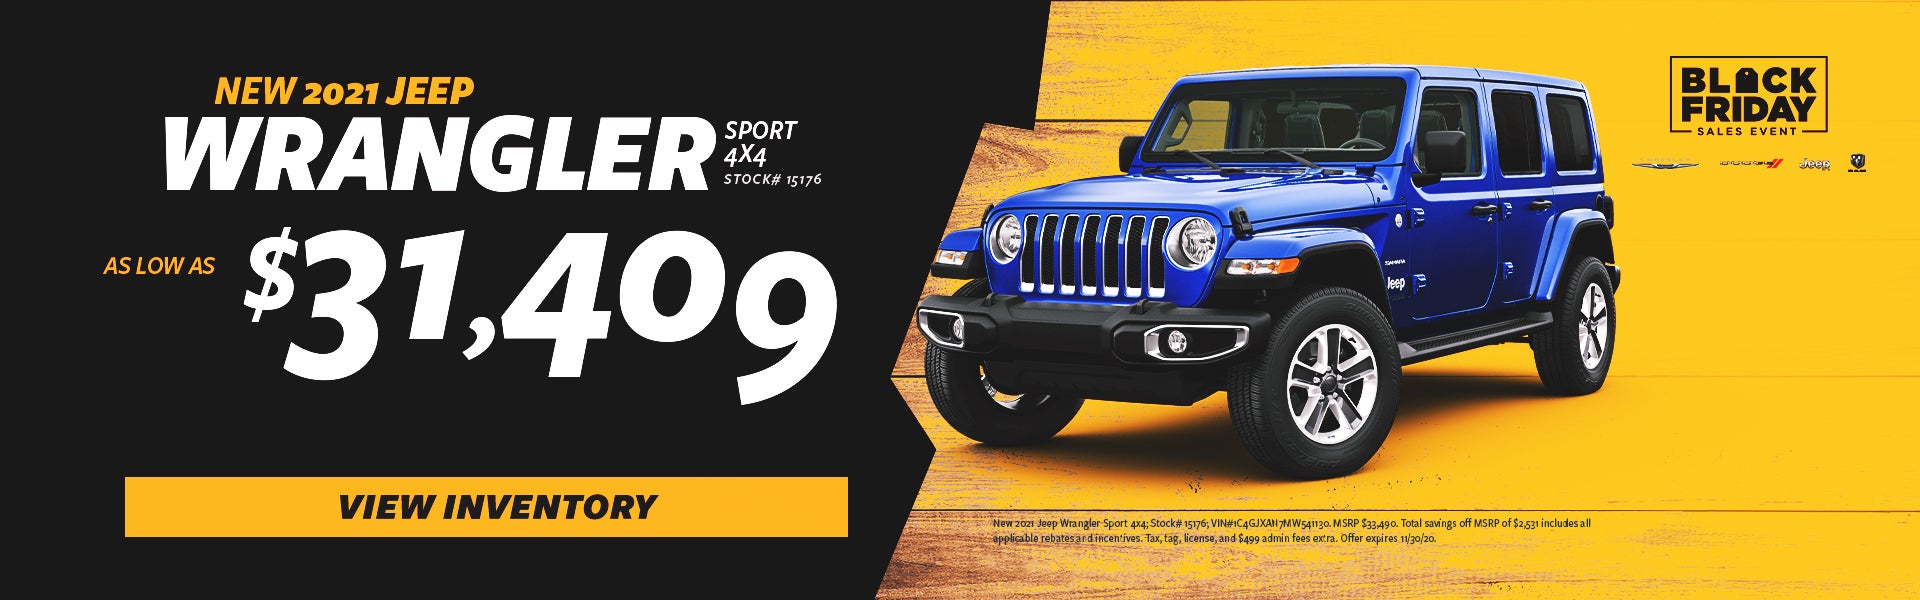 New 2021 Jeep Wrangler Sport 4x4 - As Low As $31,409!